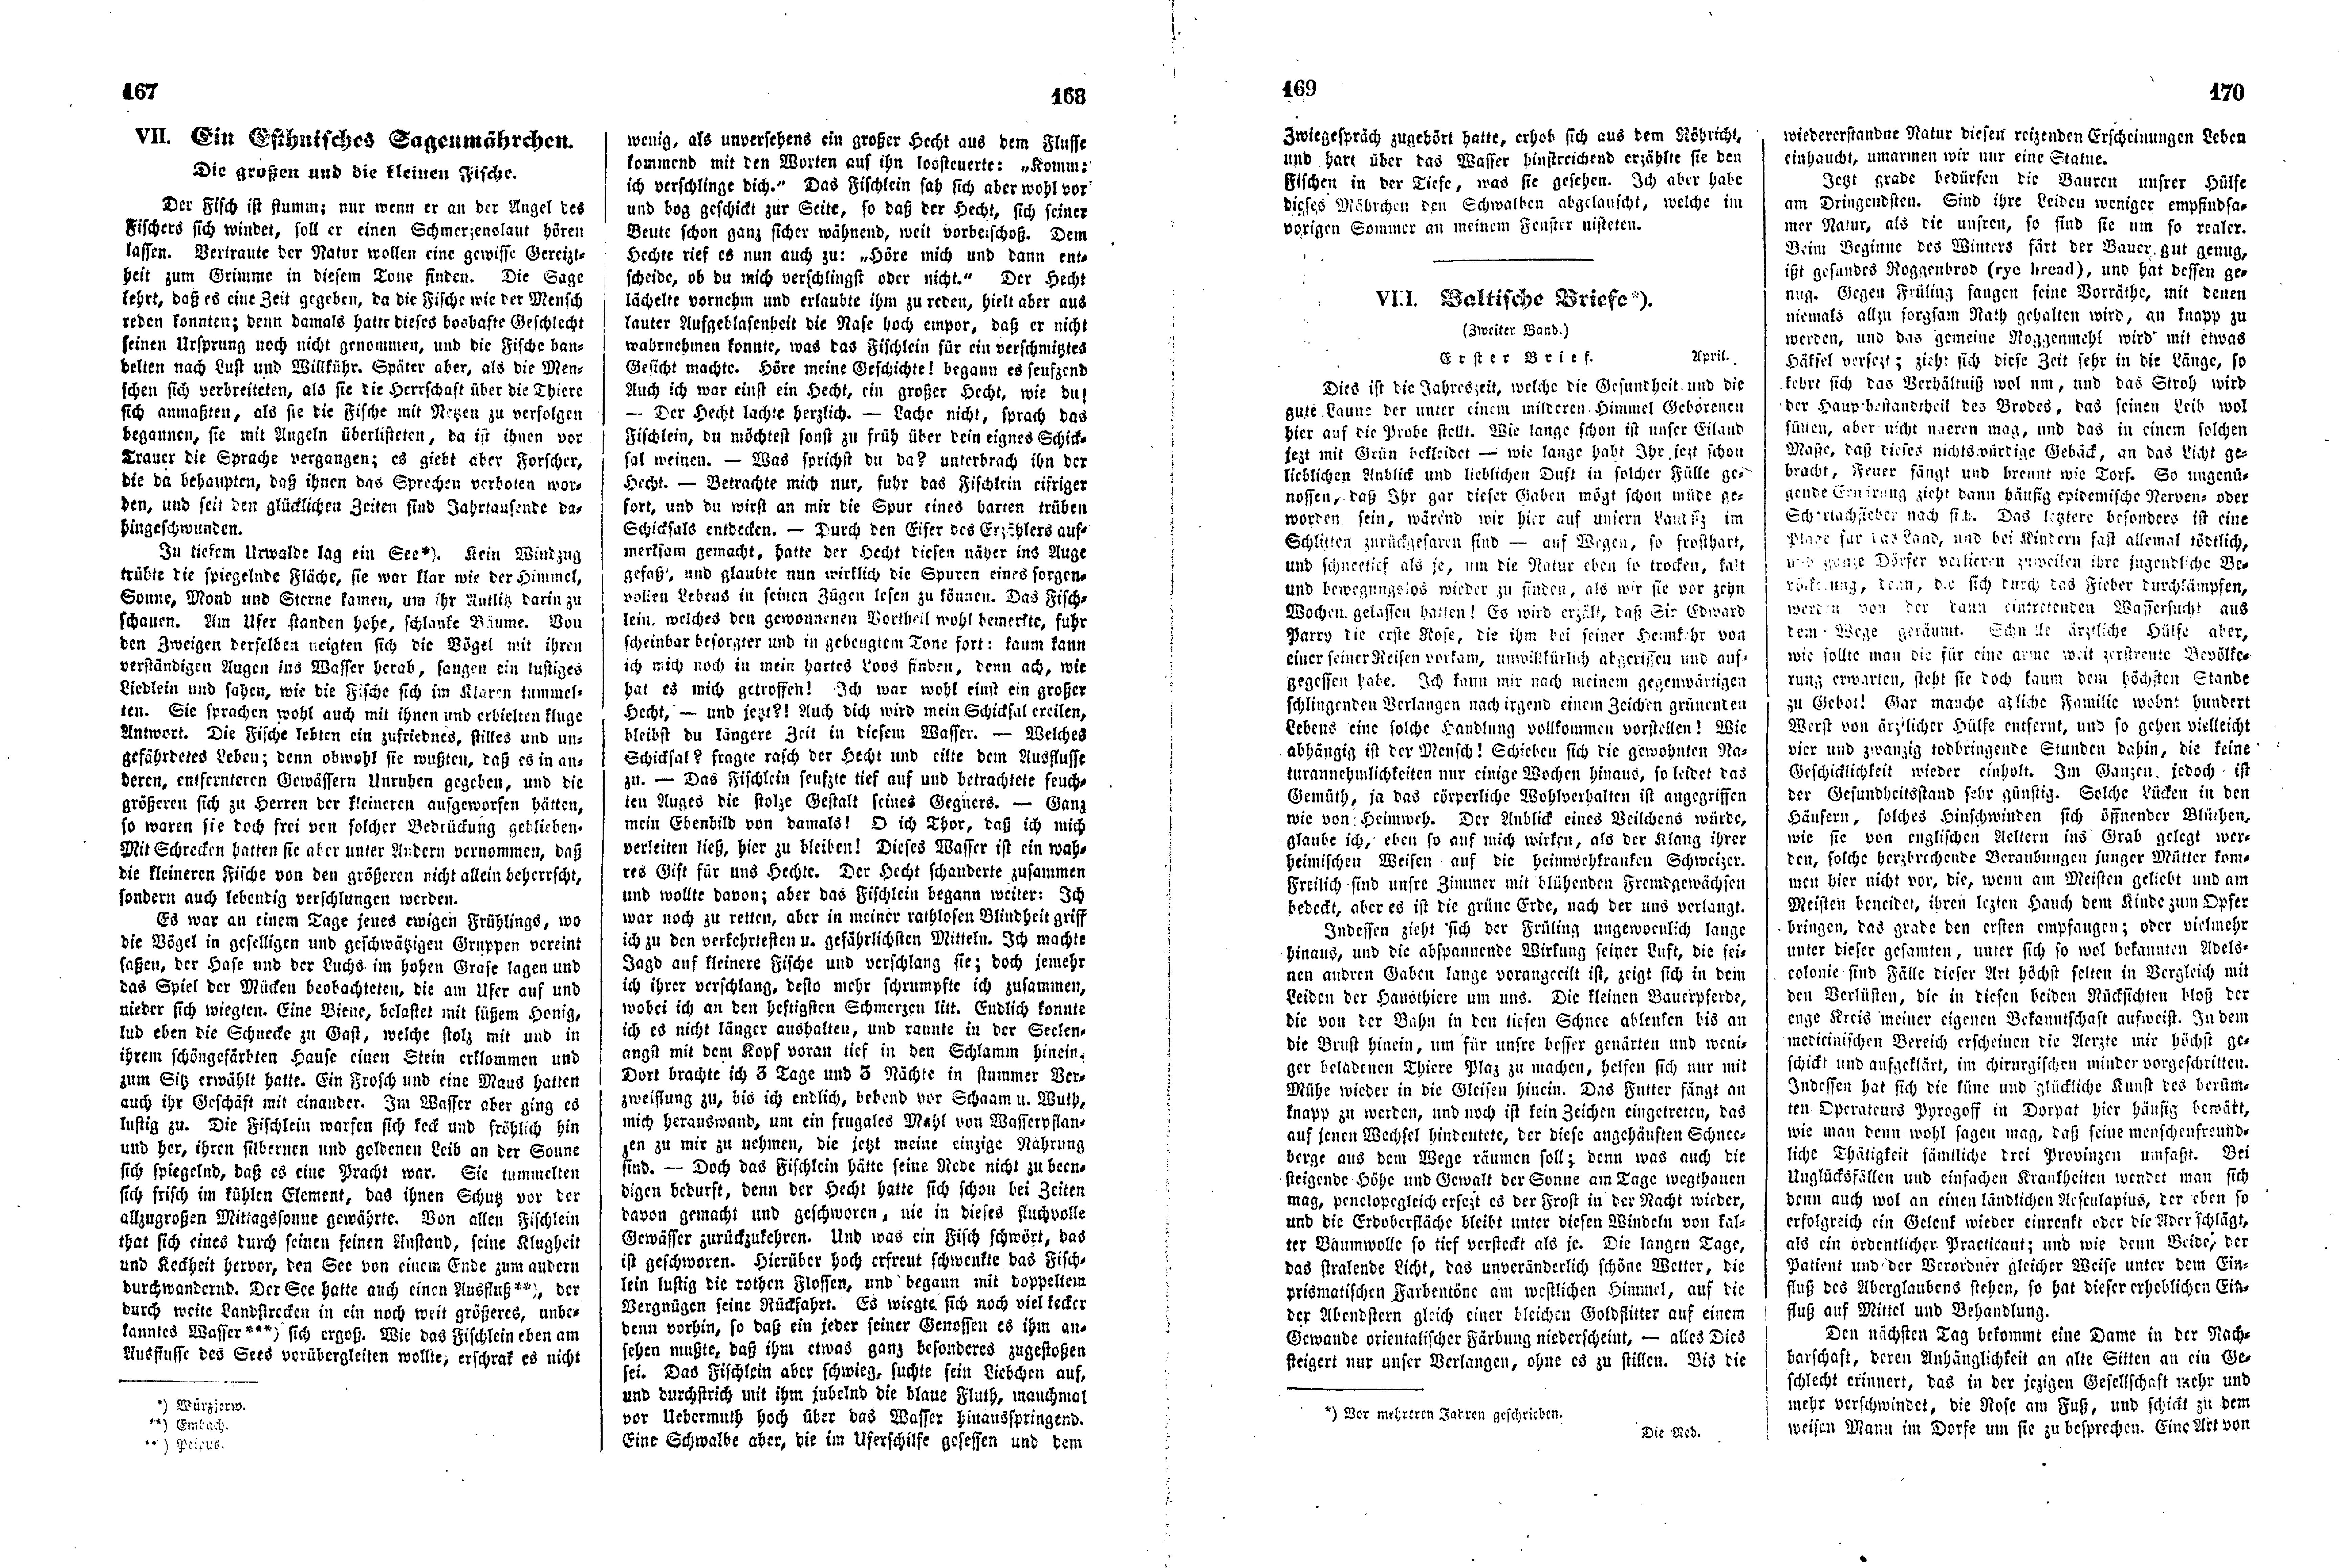 Das Inland [11] (1846) | 47. (167-170) Main body of text